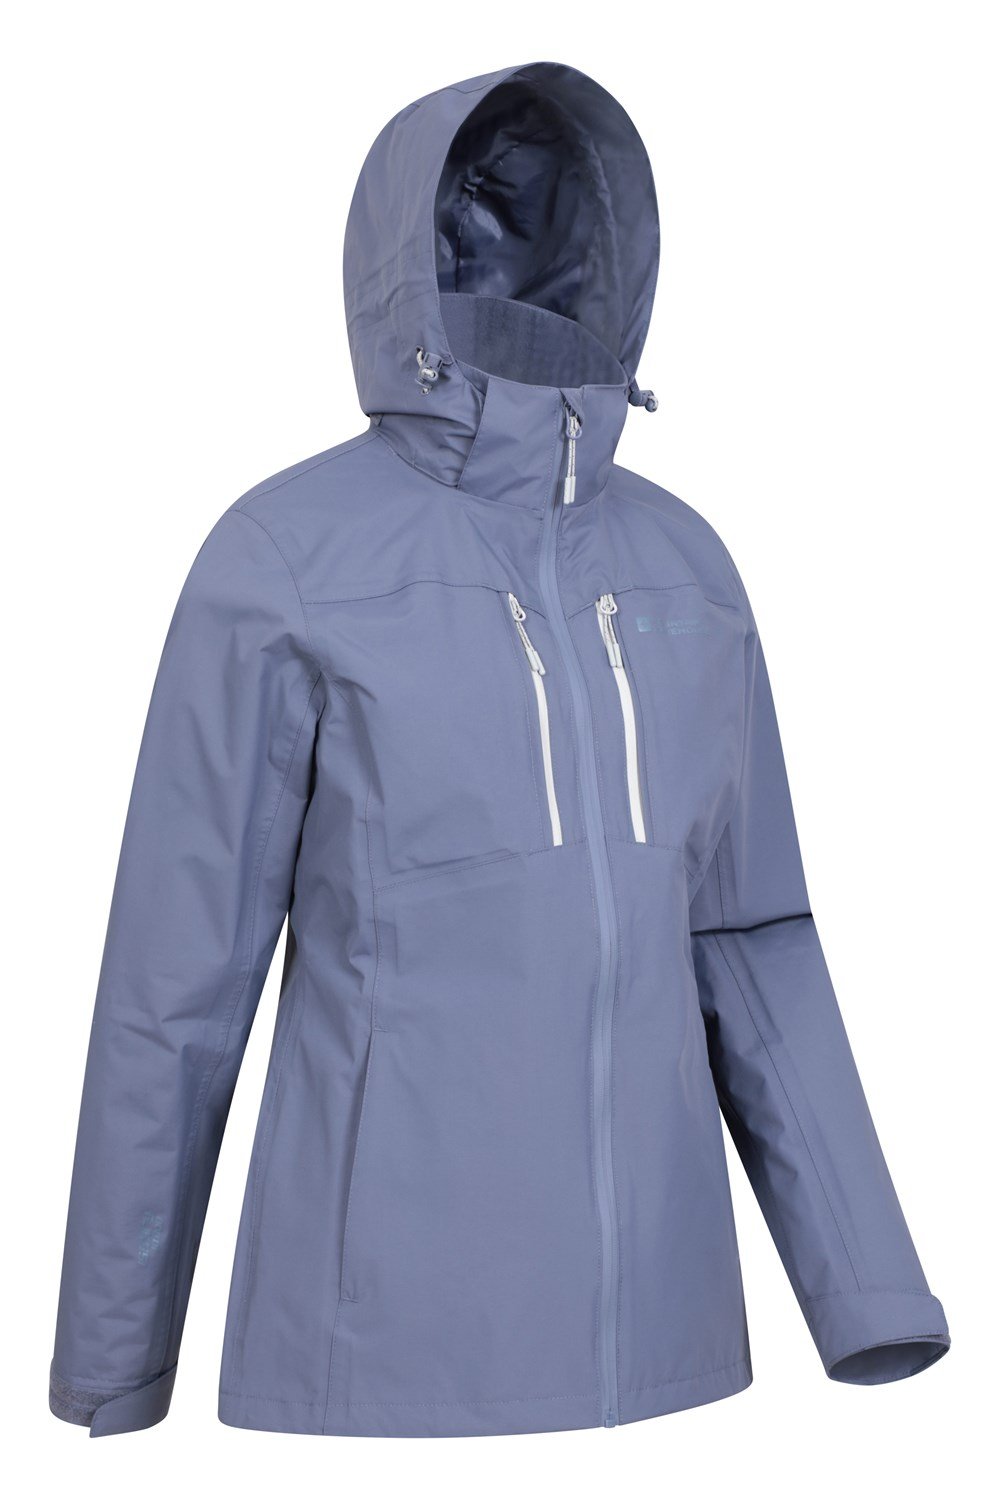 Mountain Warehouse Rainforest Women's Jacket Ladies Waterproof Hooded ...